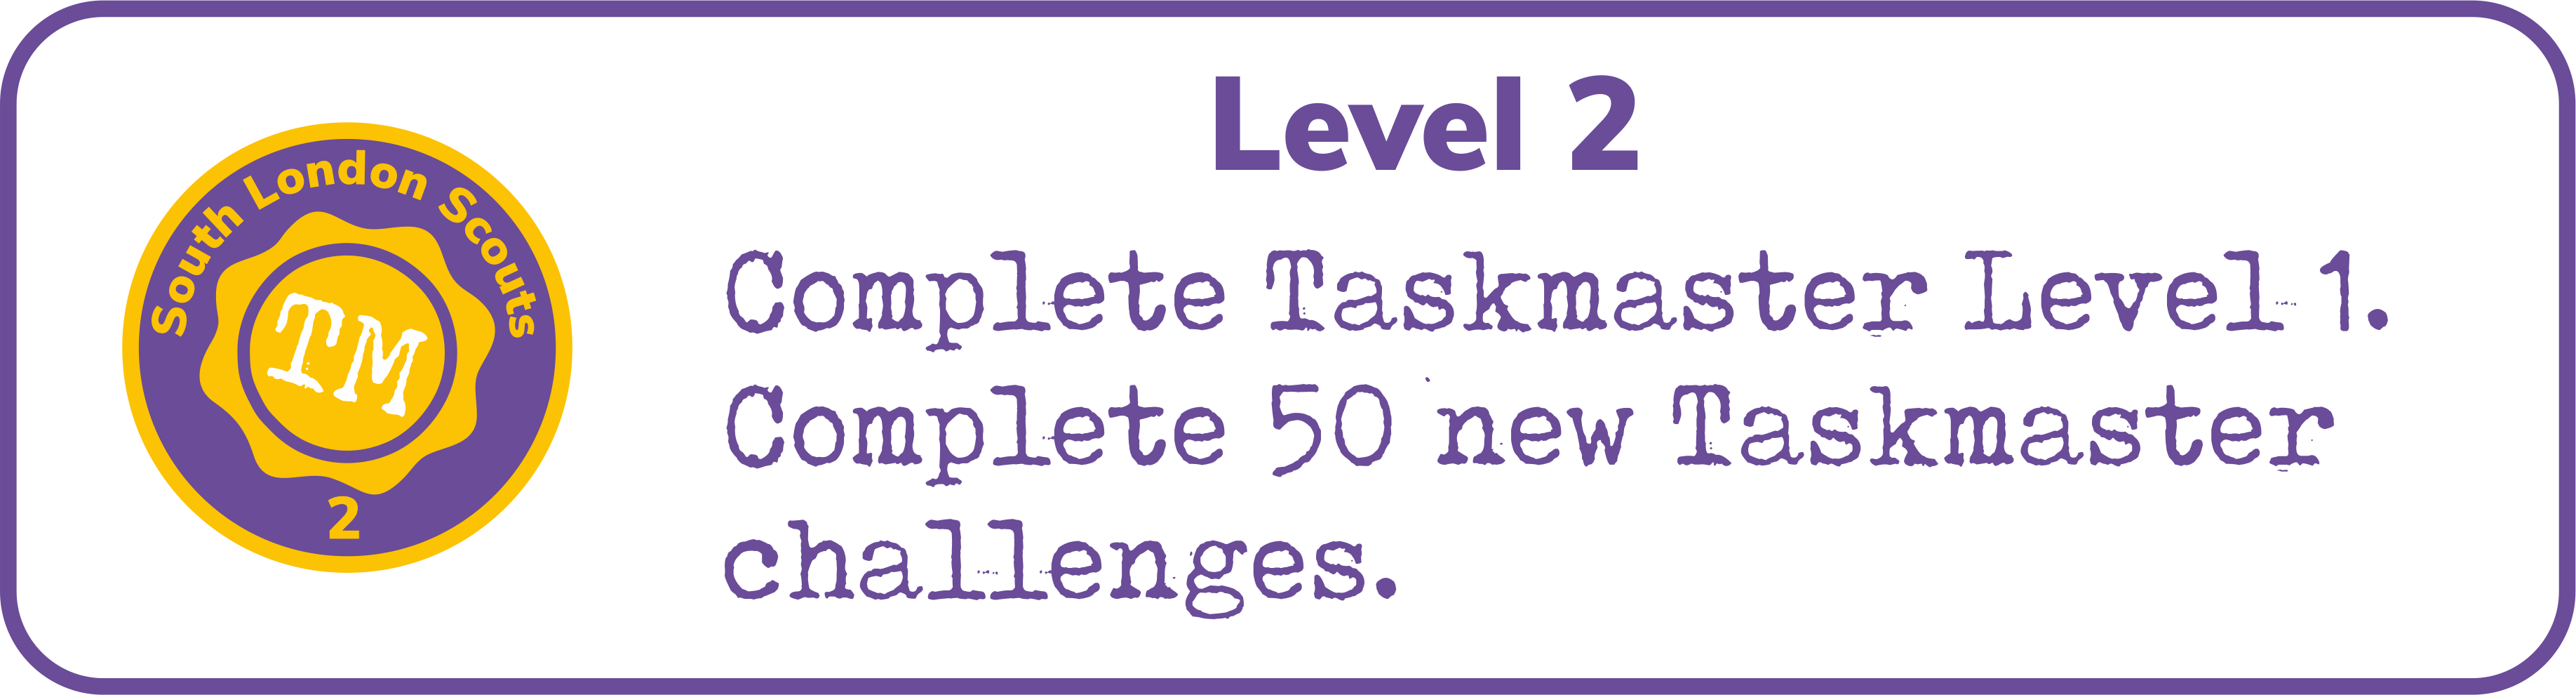 Taskmaster level two - complete 50 taskmaster challenges